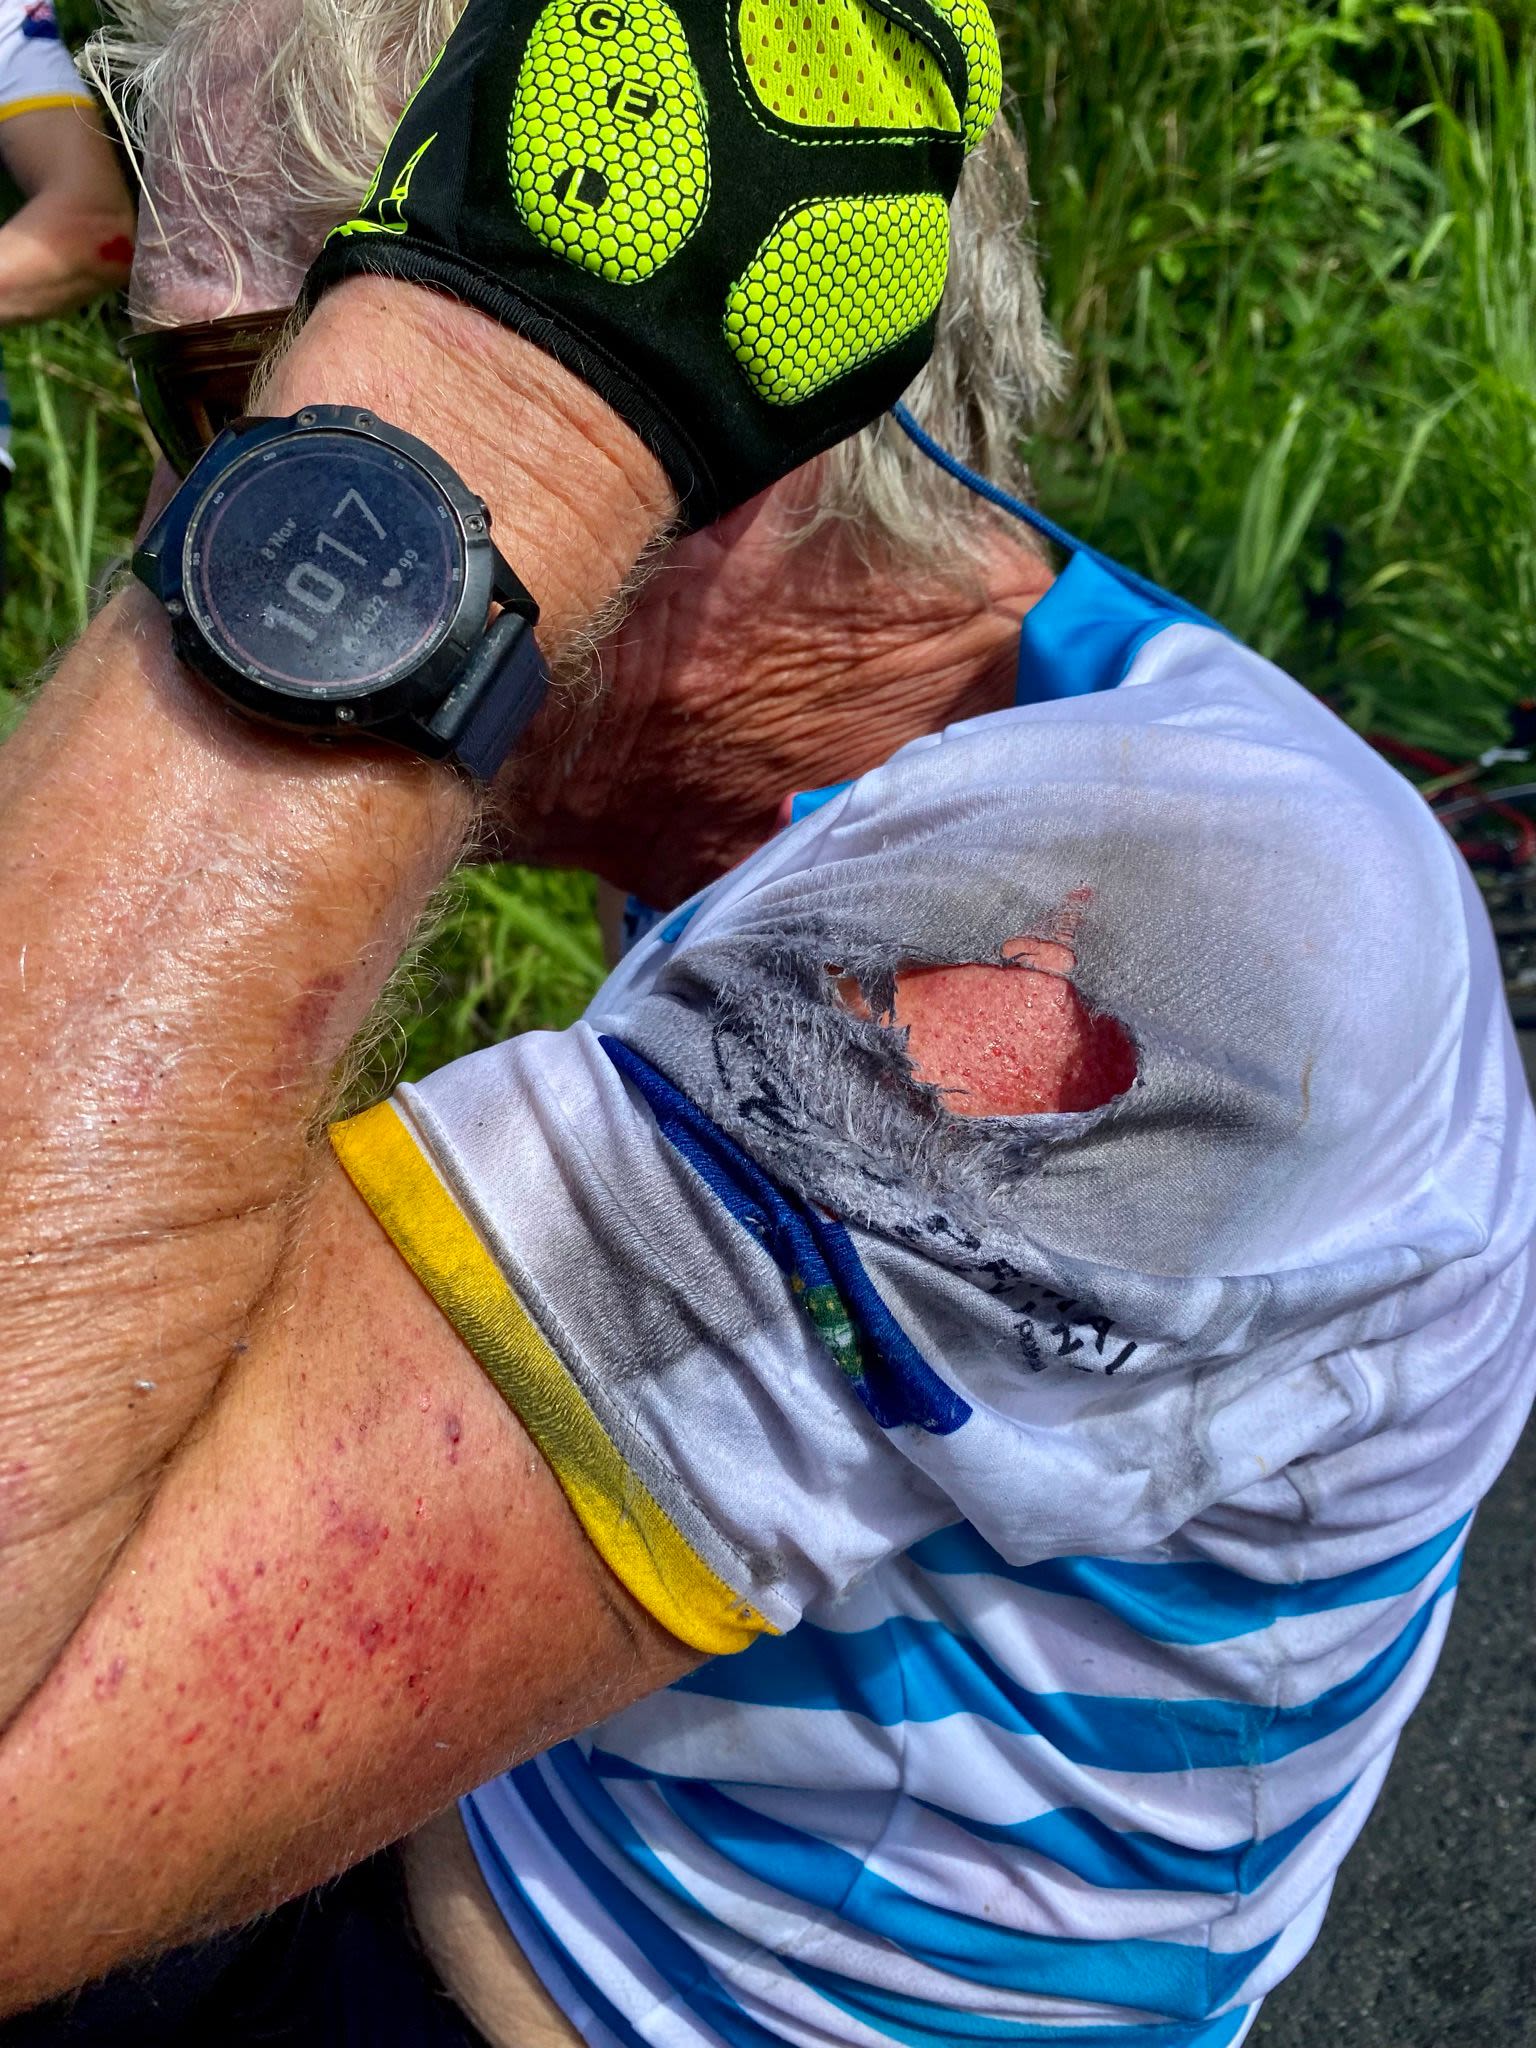 Richard Branson's injured arm following a bike crash on the 2021 Strive Challenge